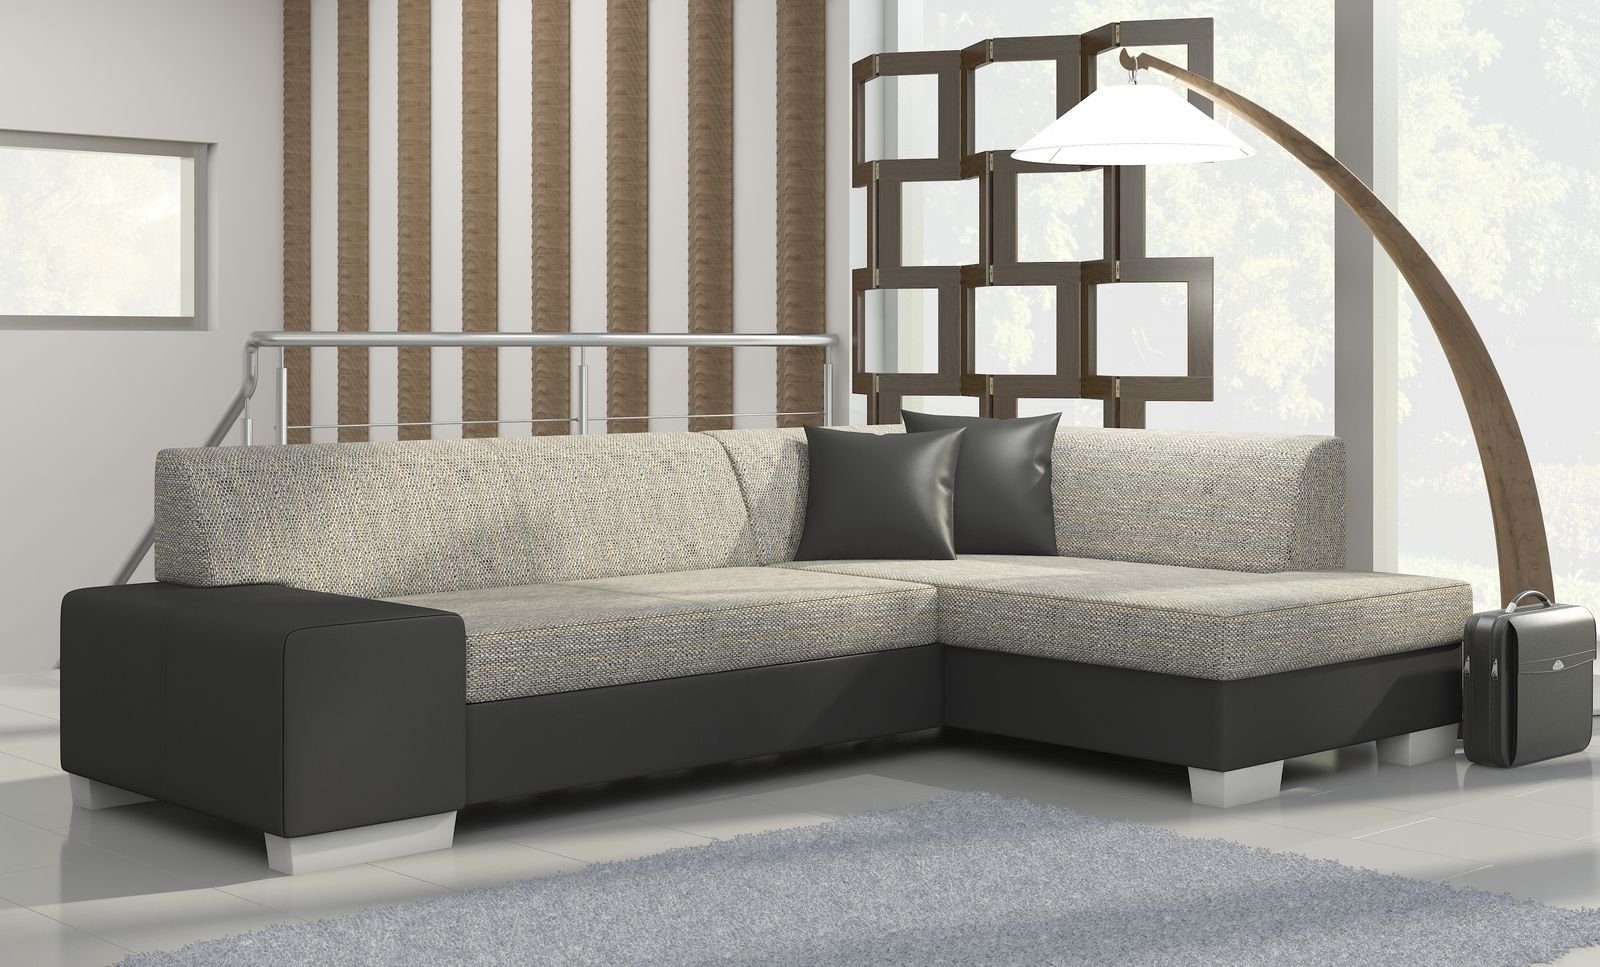 JVmoebel Ecksofa, Design Ecksofa Schlafsofa Bettfunktion Couch Leder Textil Polster Hellgrau / Schwarz